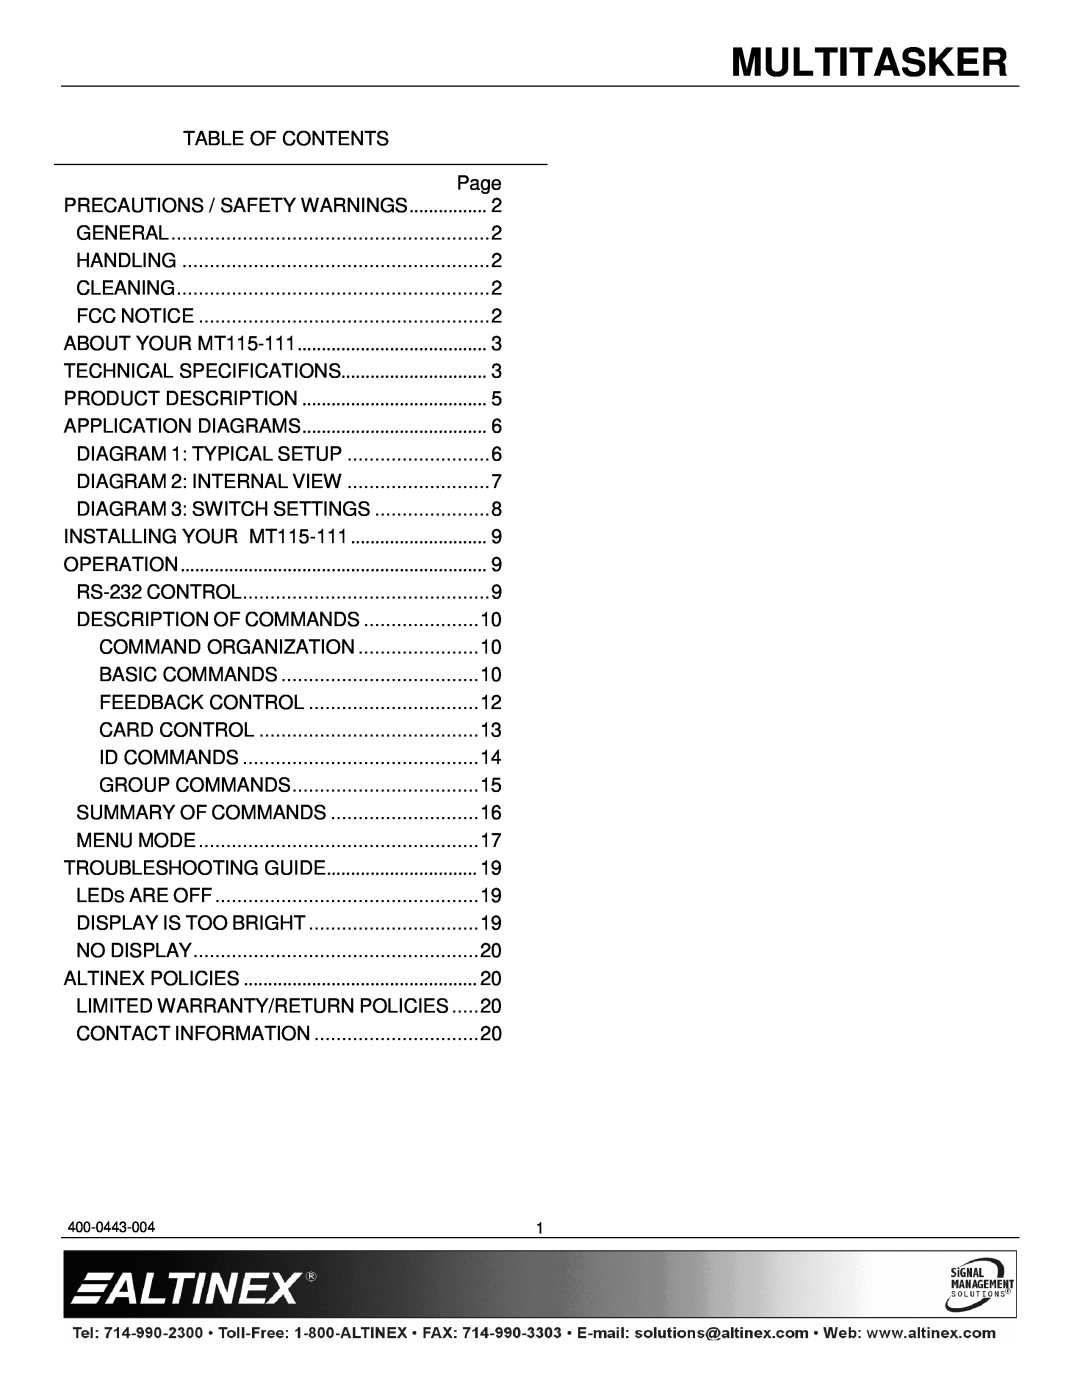 Altinex MT115-111 manual Multitasker, Table Of Contents 